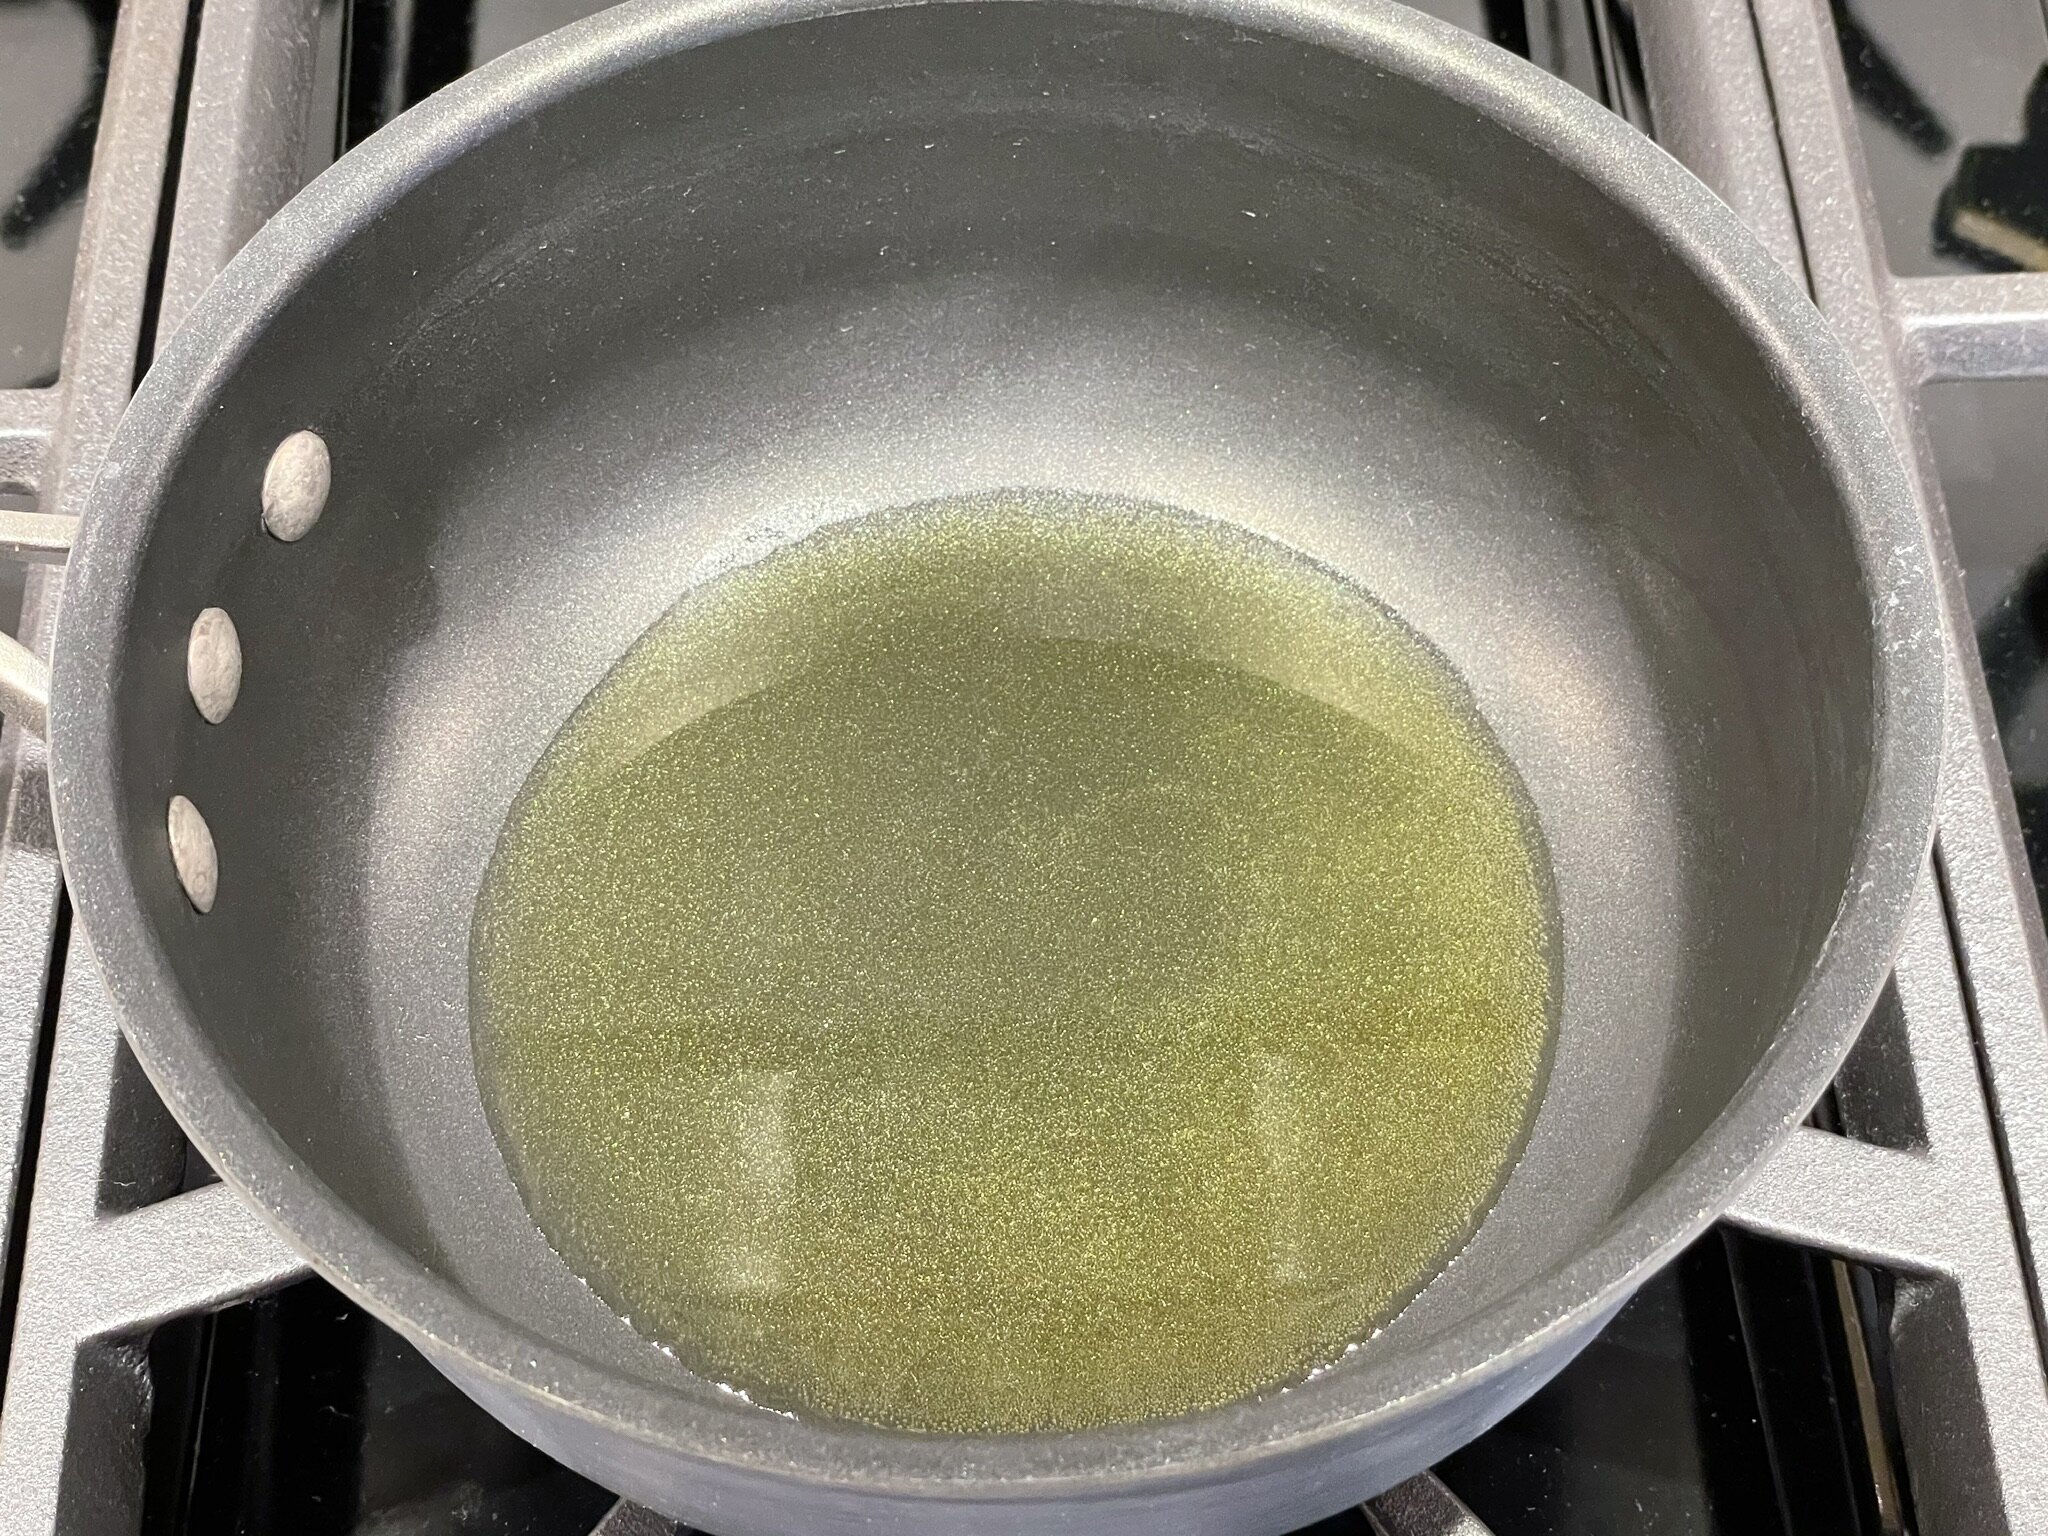 Heat olive oil.